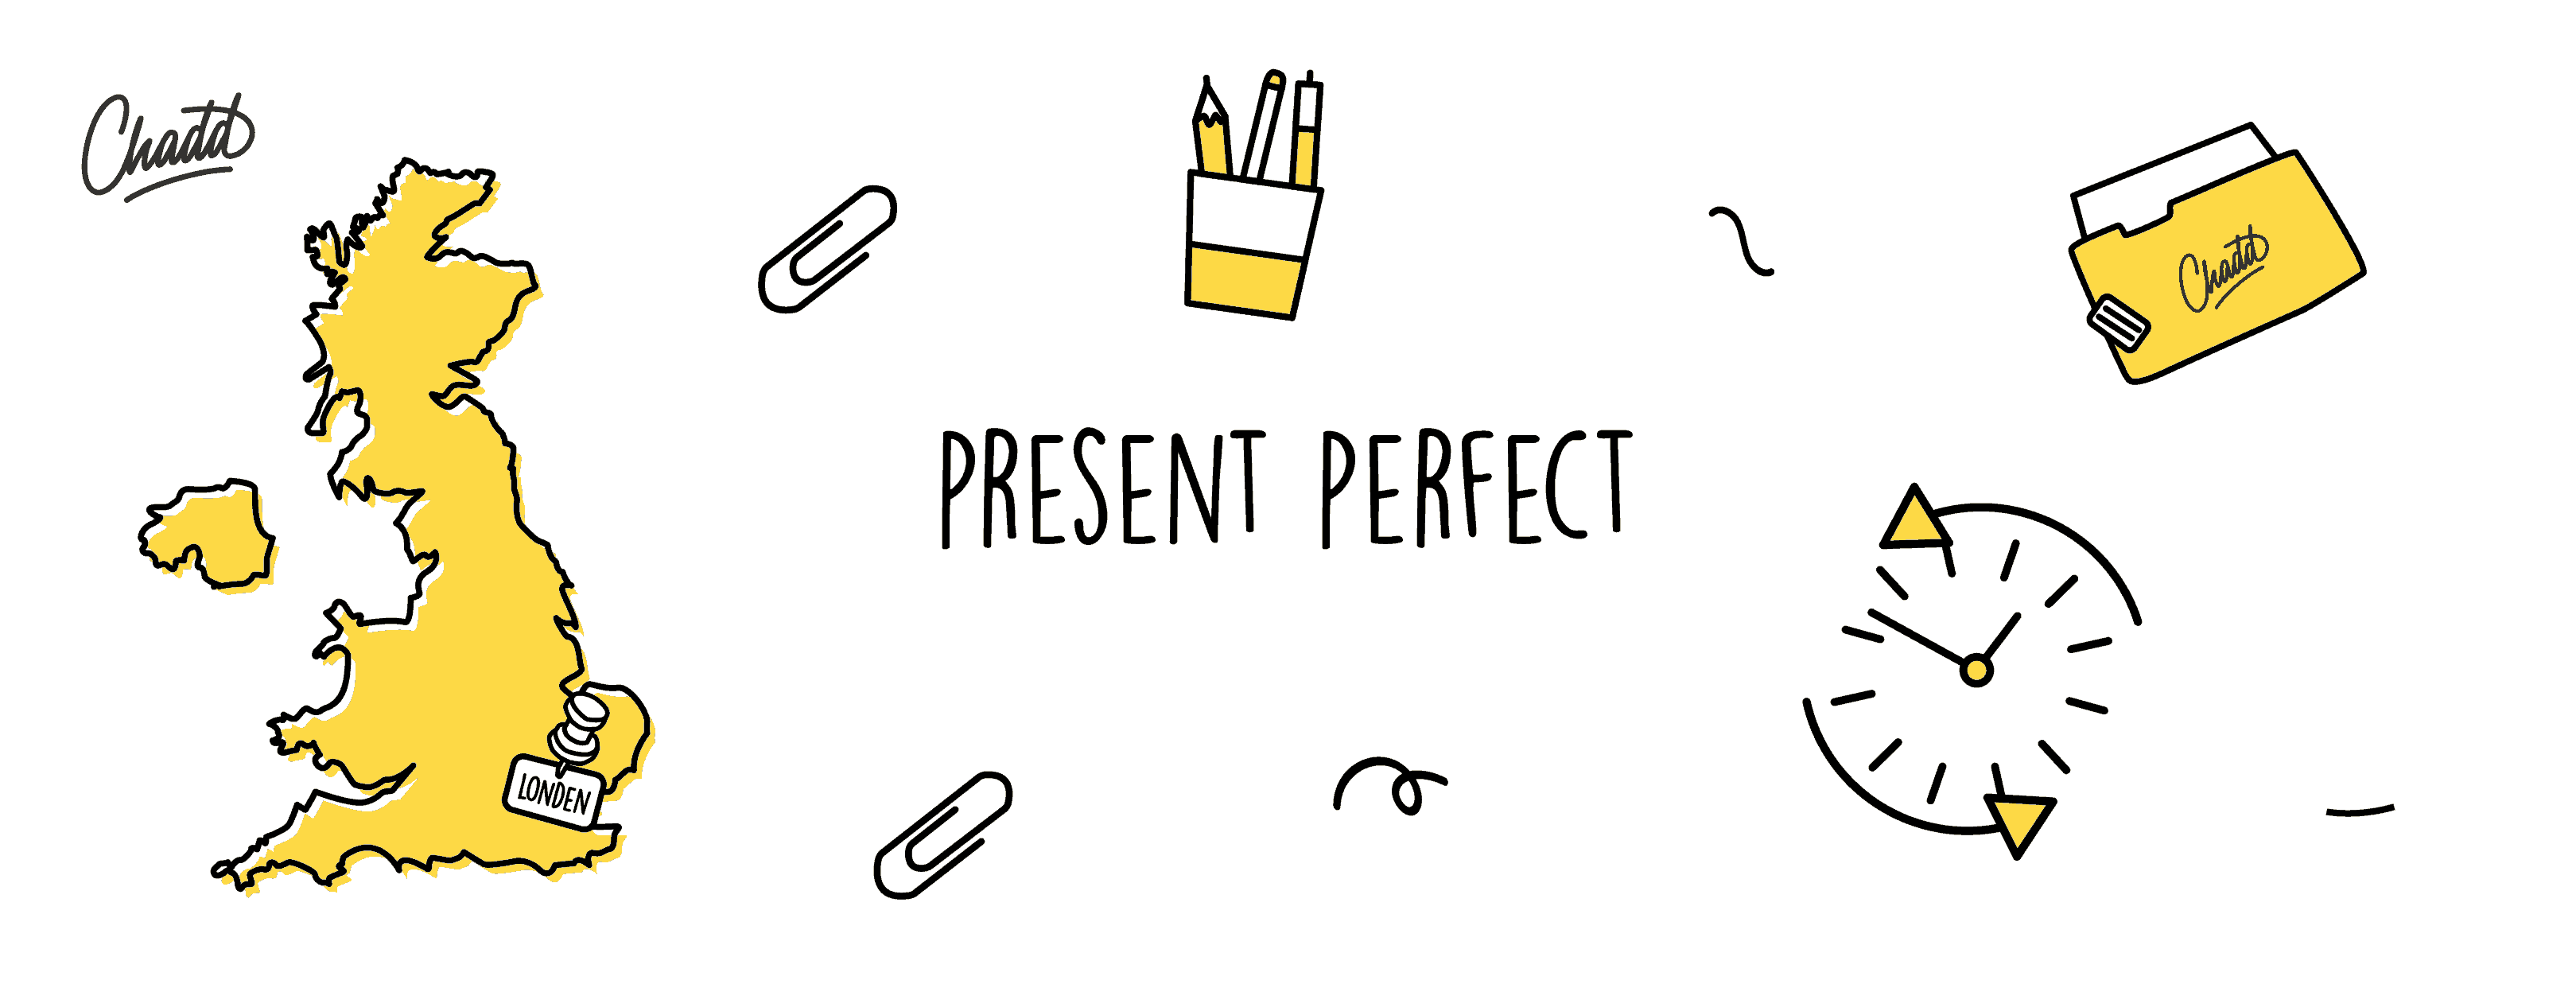 present perfect